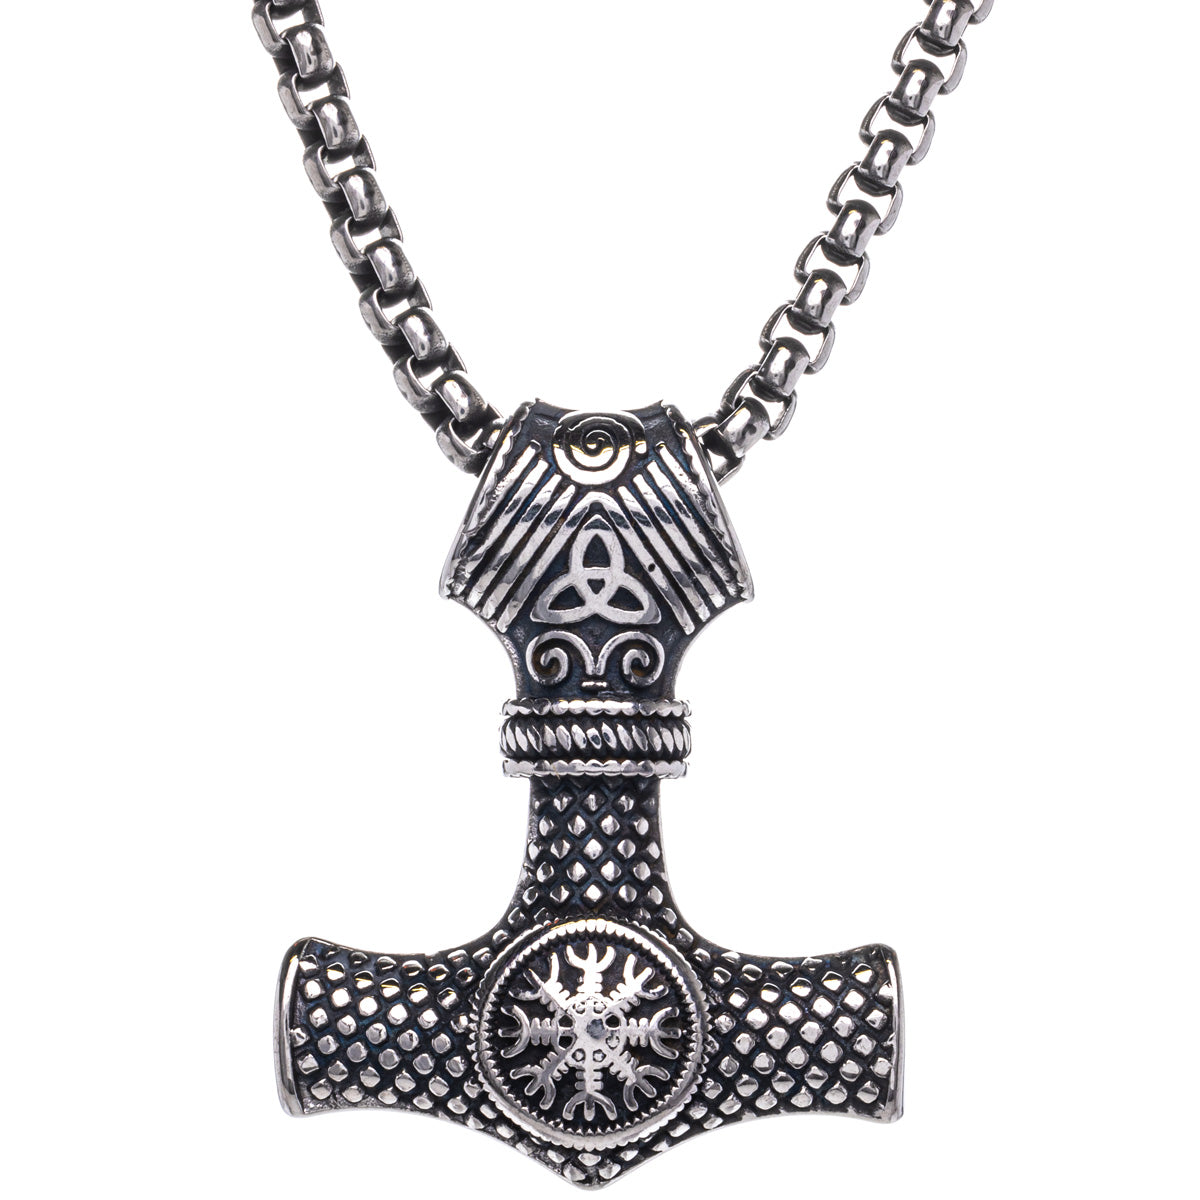 Thorin hammer Aegishjalmur pendant necklace (Steel 316L)